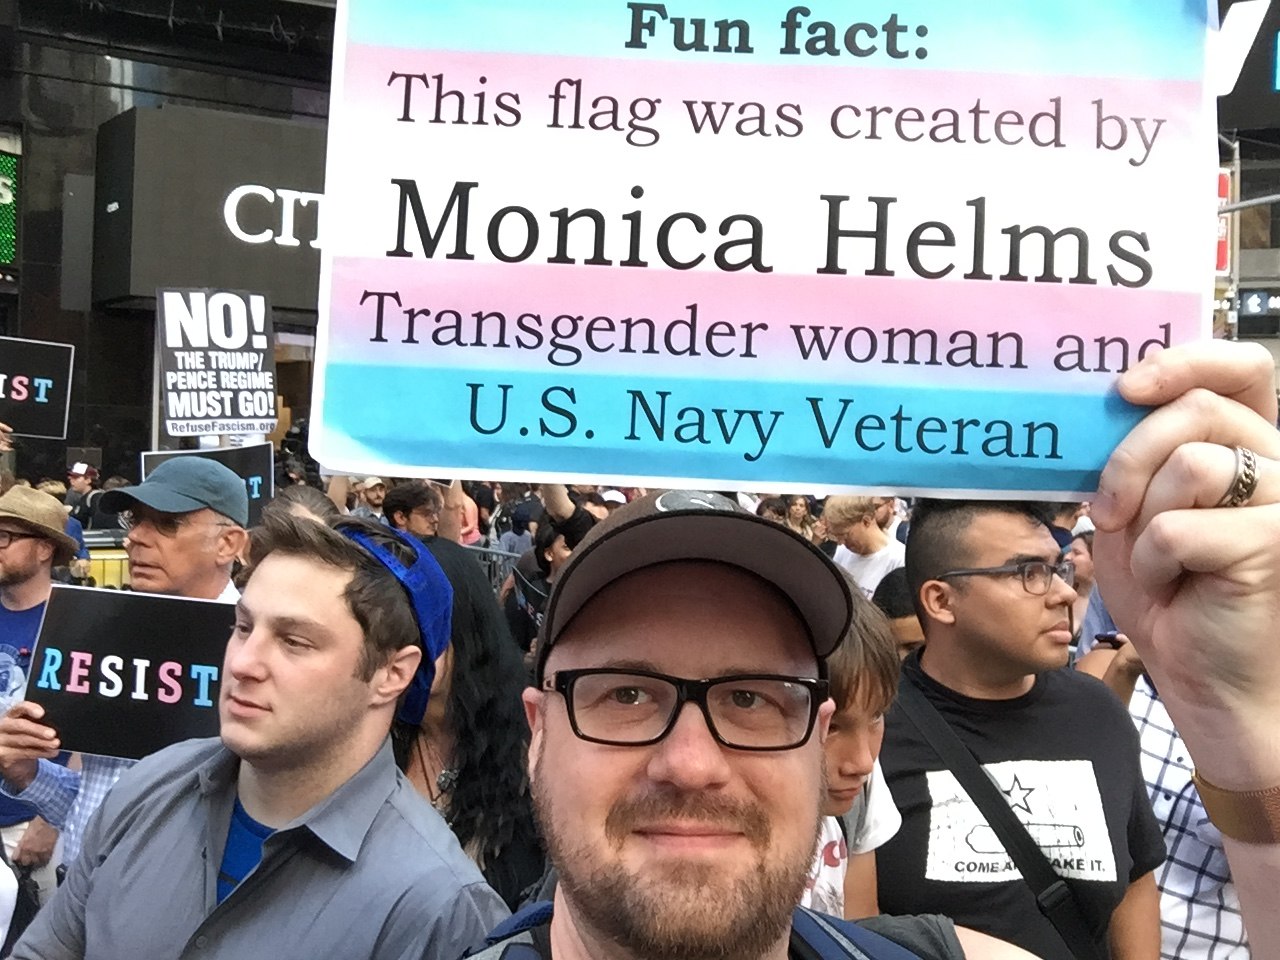 Trump's Transgender Military Ban Calls Me Unfit For Service